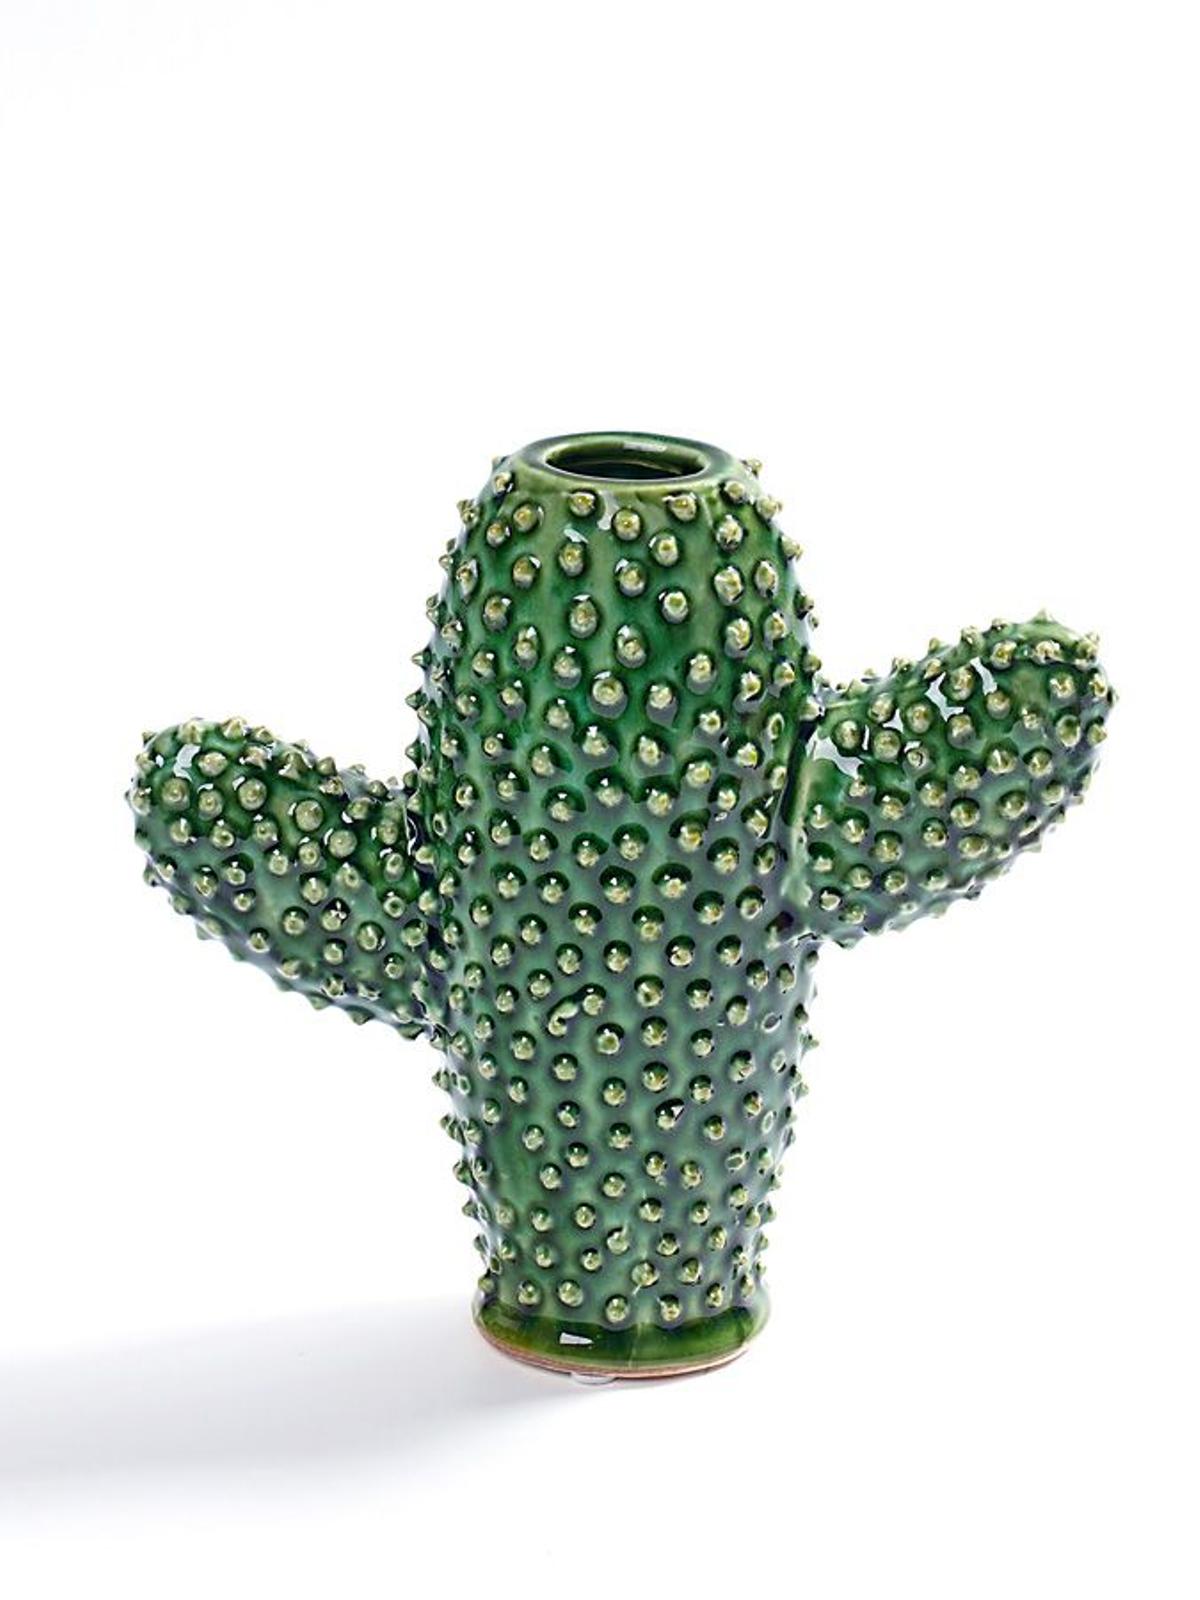 Jarrón Cactus, Marie Michielssen para Serax